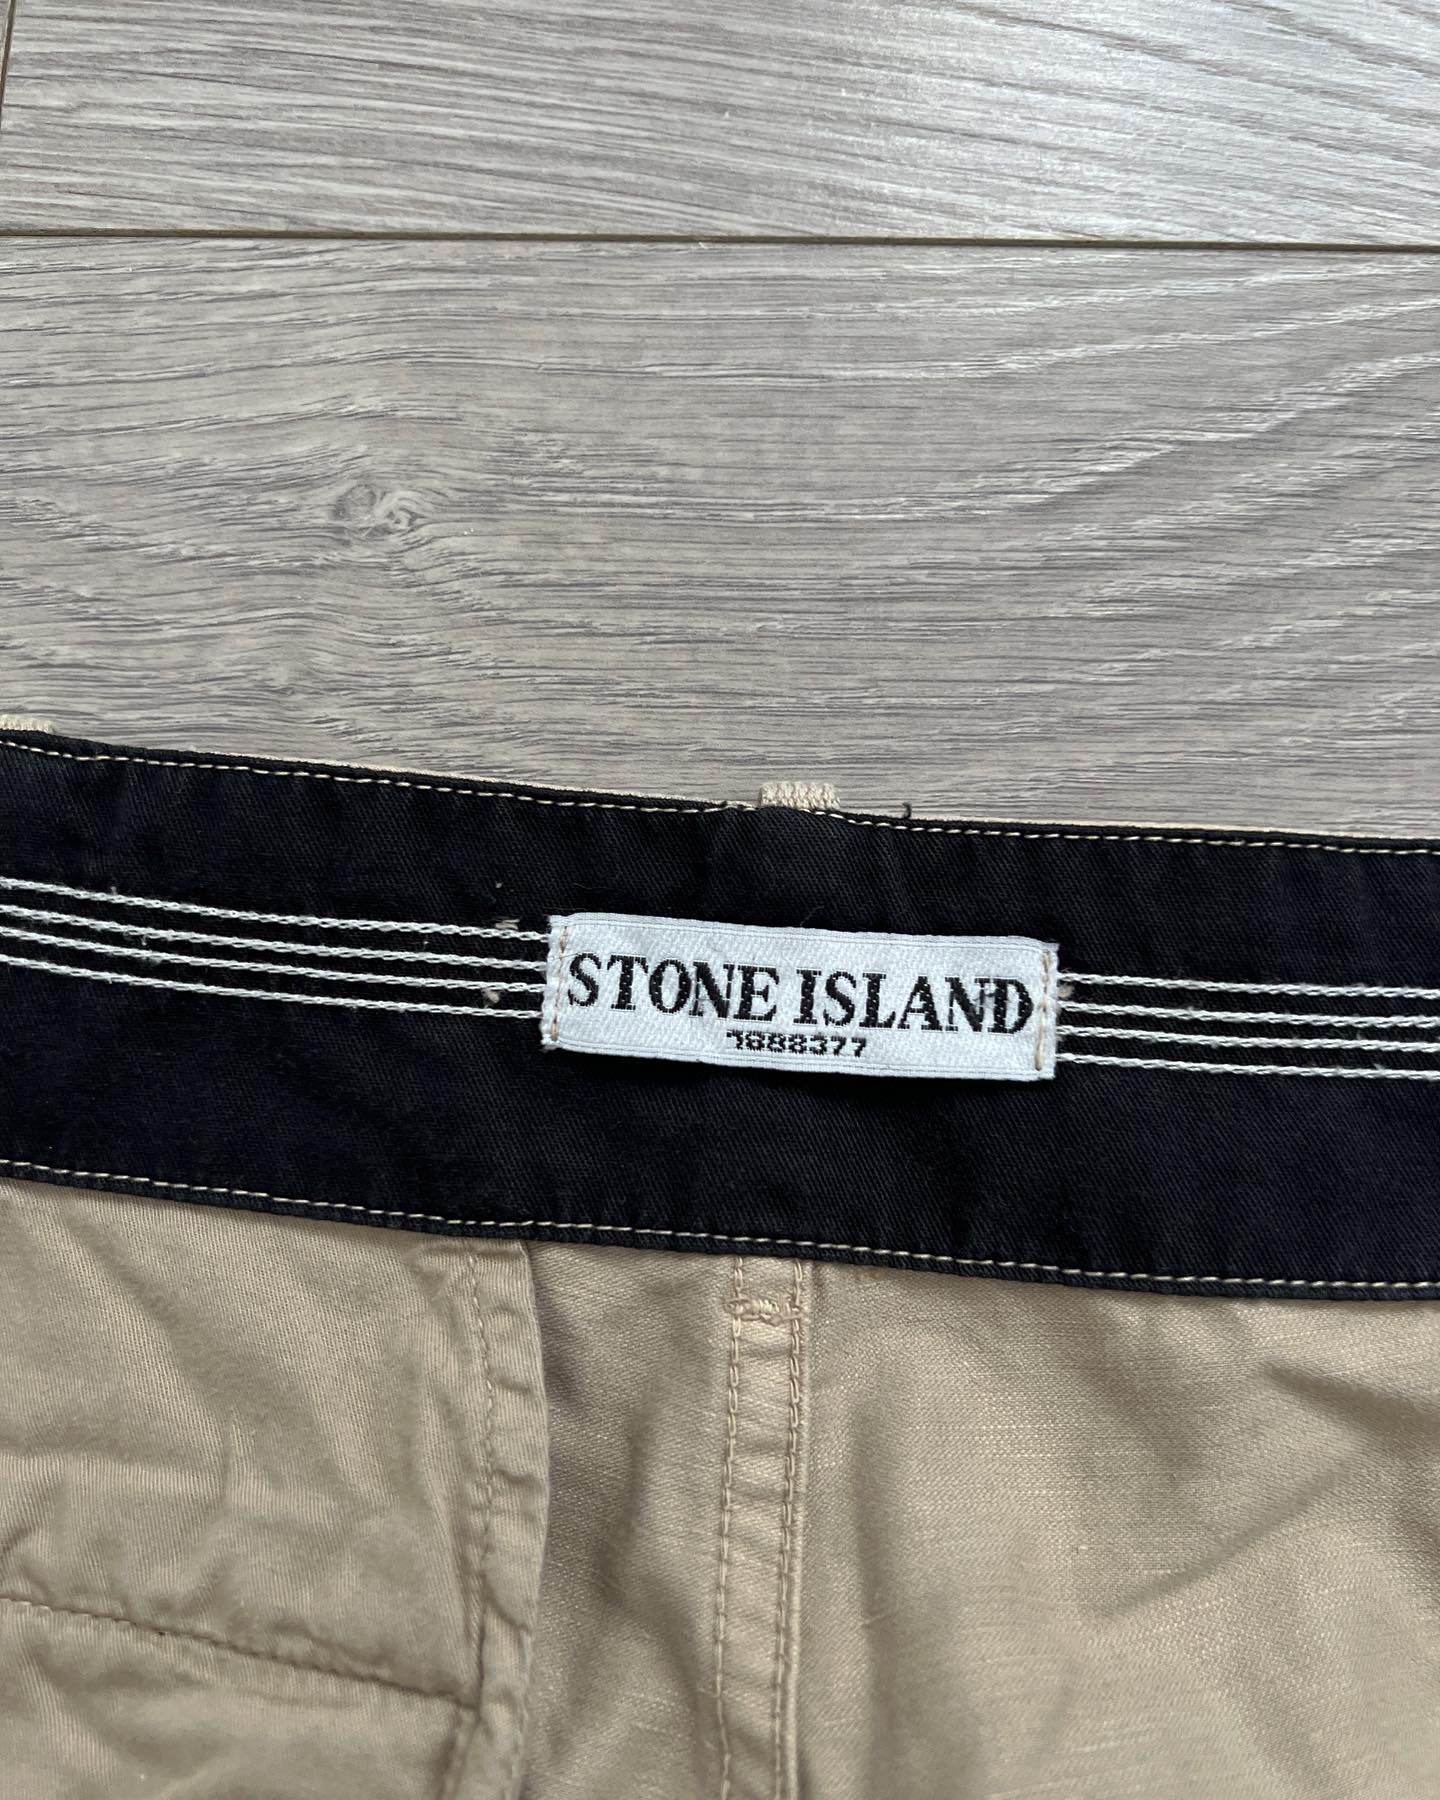 Stone Island SS2010 Velcro Flap Front Flight Pants - Size 30